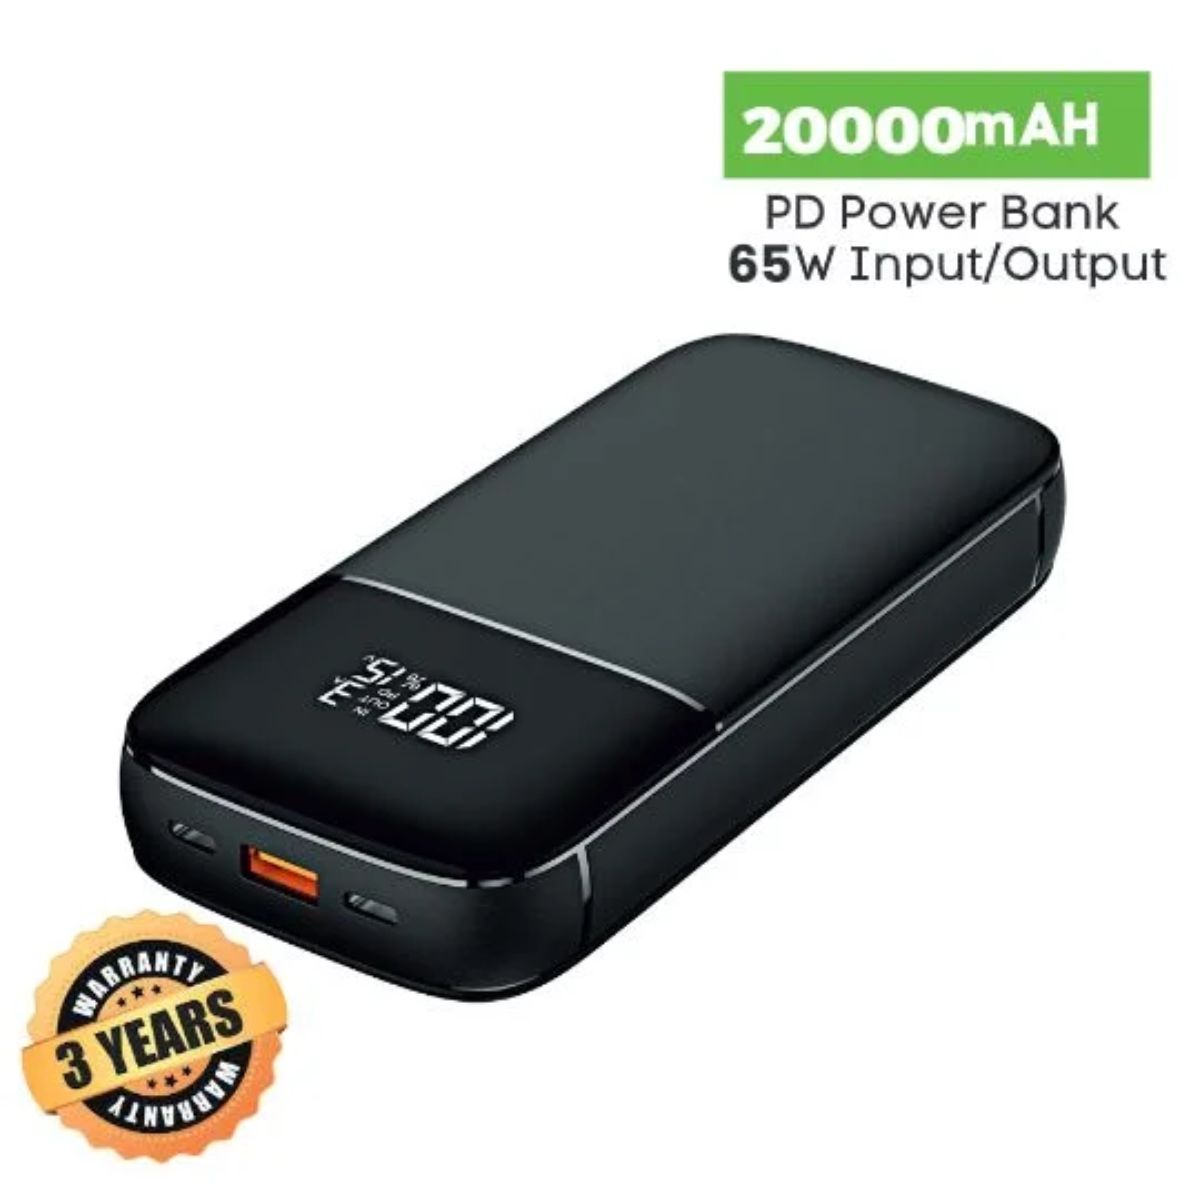 Compact Laptop Power Bank - 65W - 74Wh - 20000mAh 6